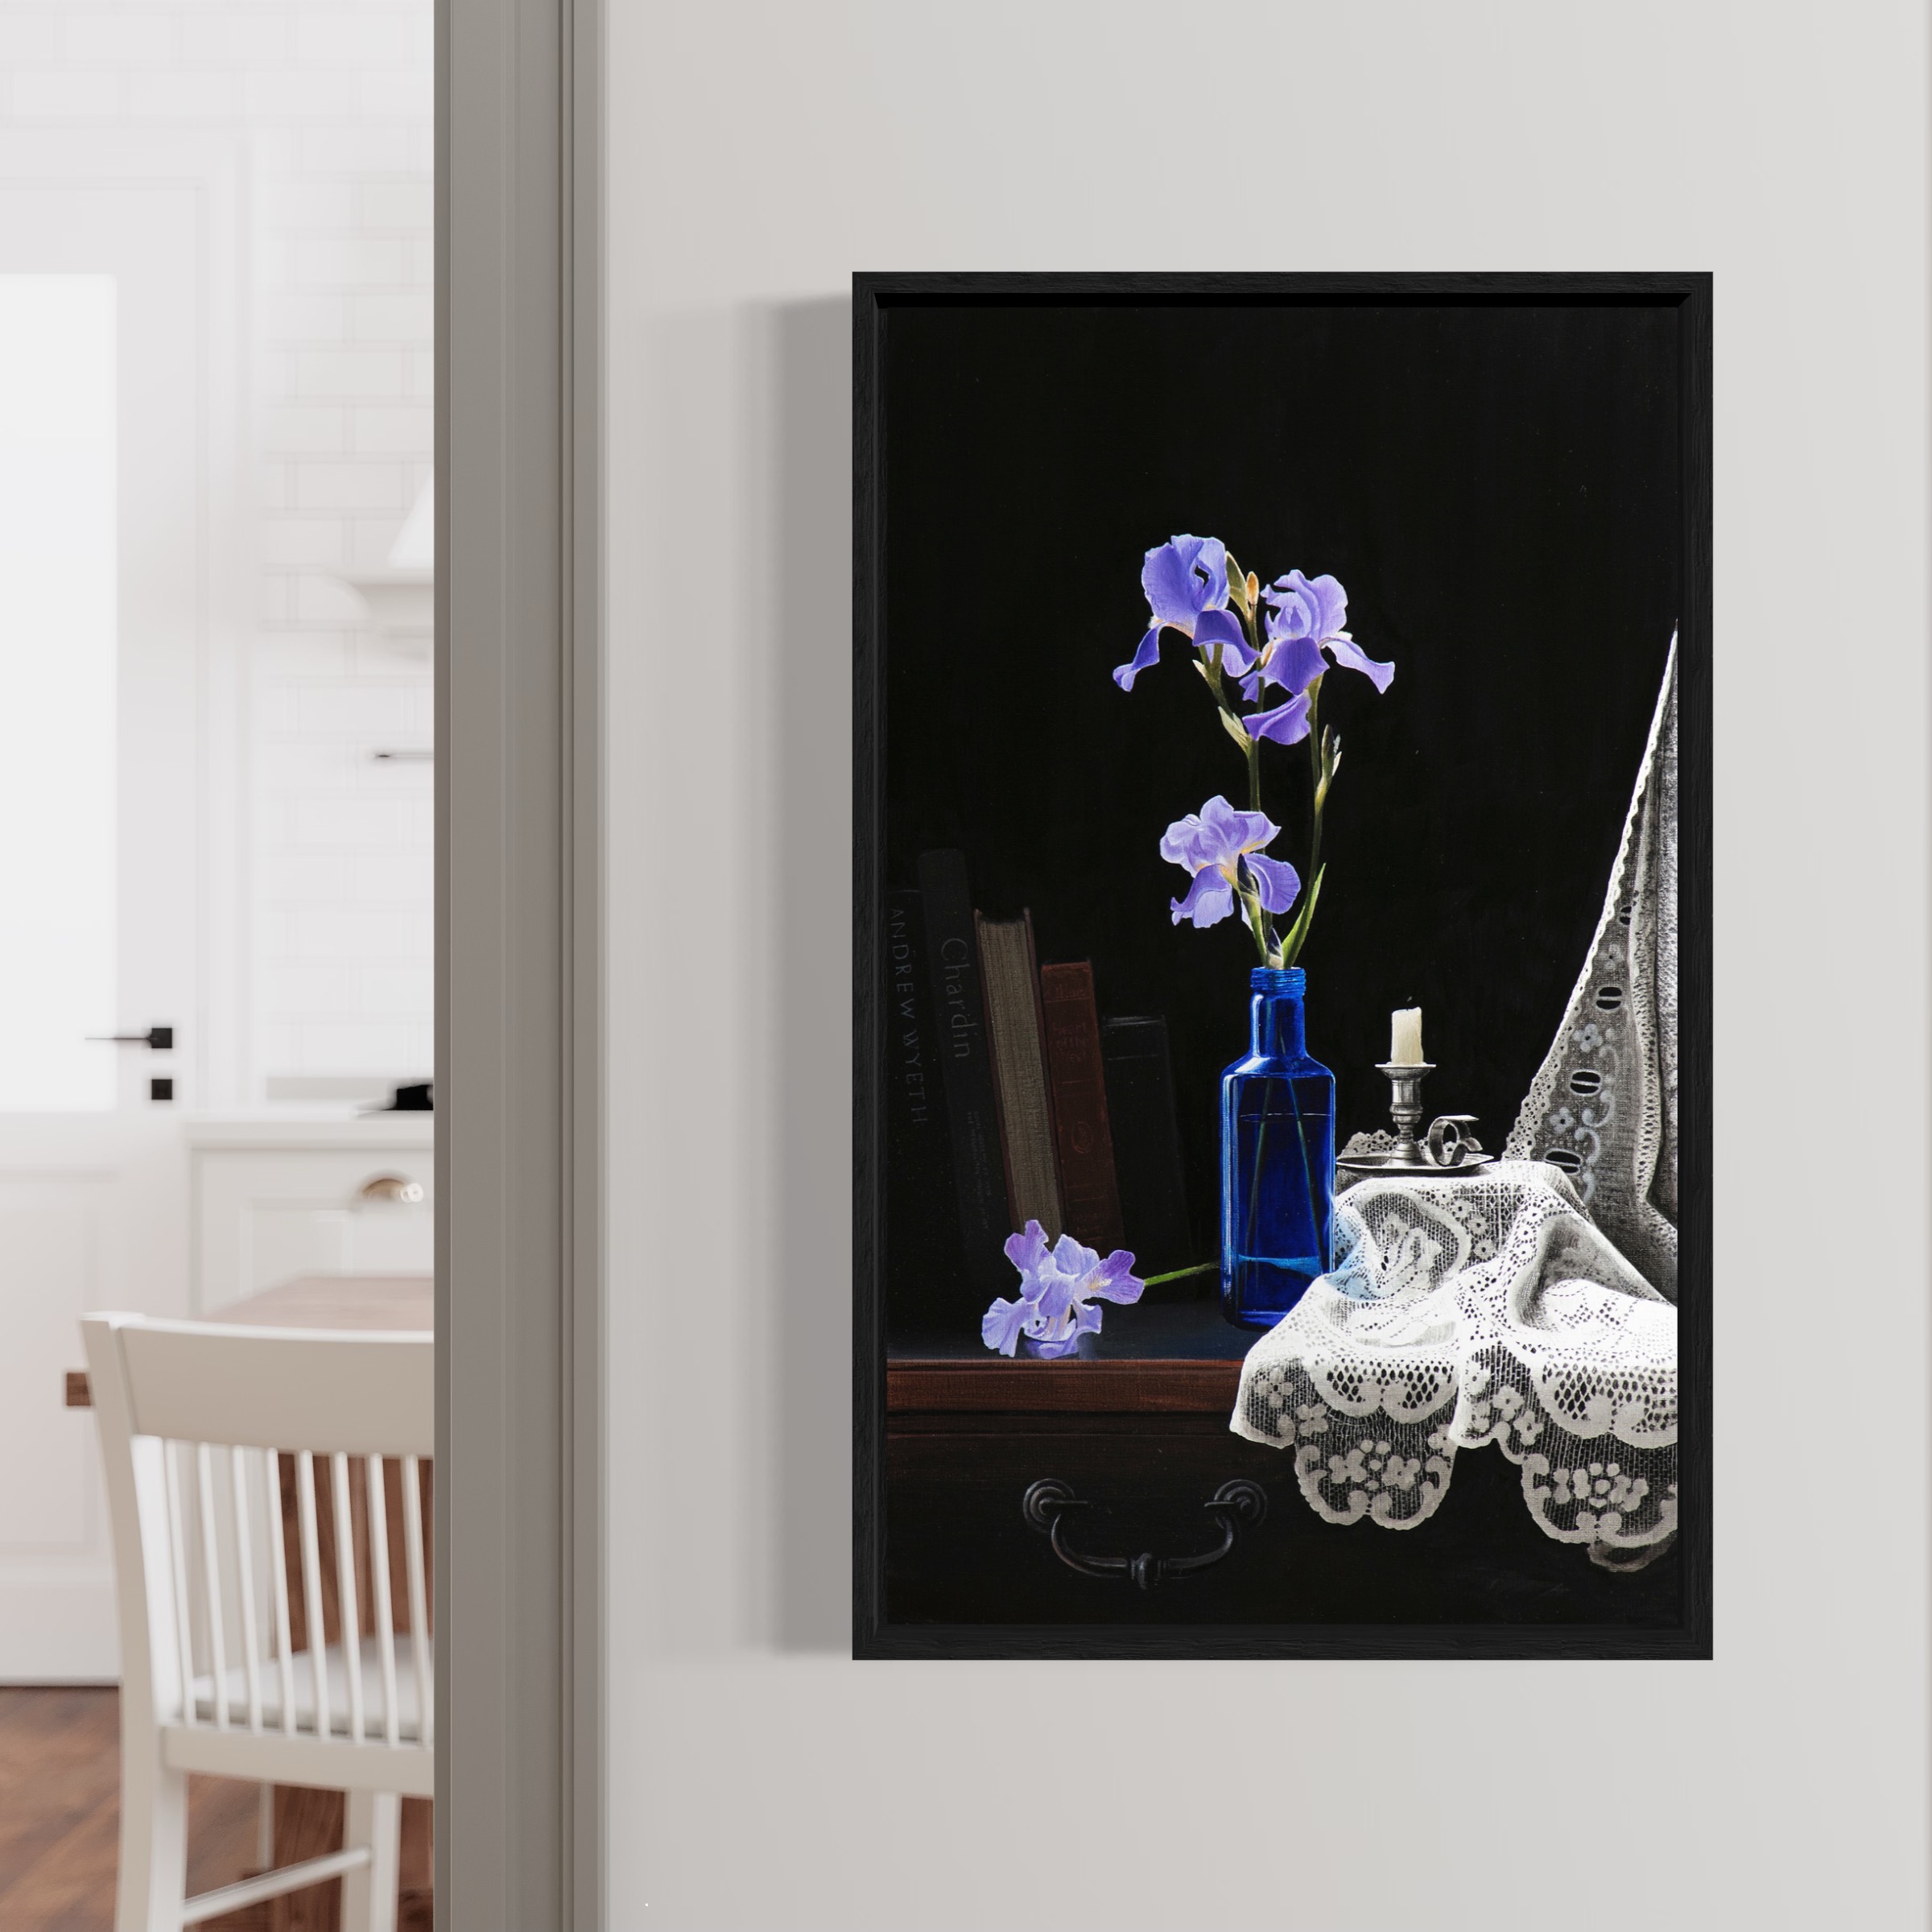 Alexander Volkov print with Digital Lavender colored Irises